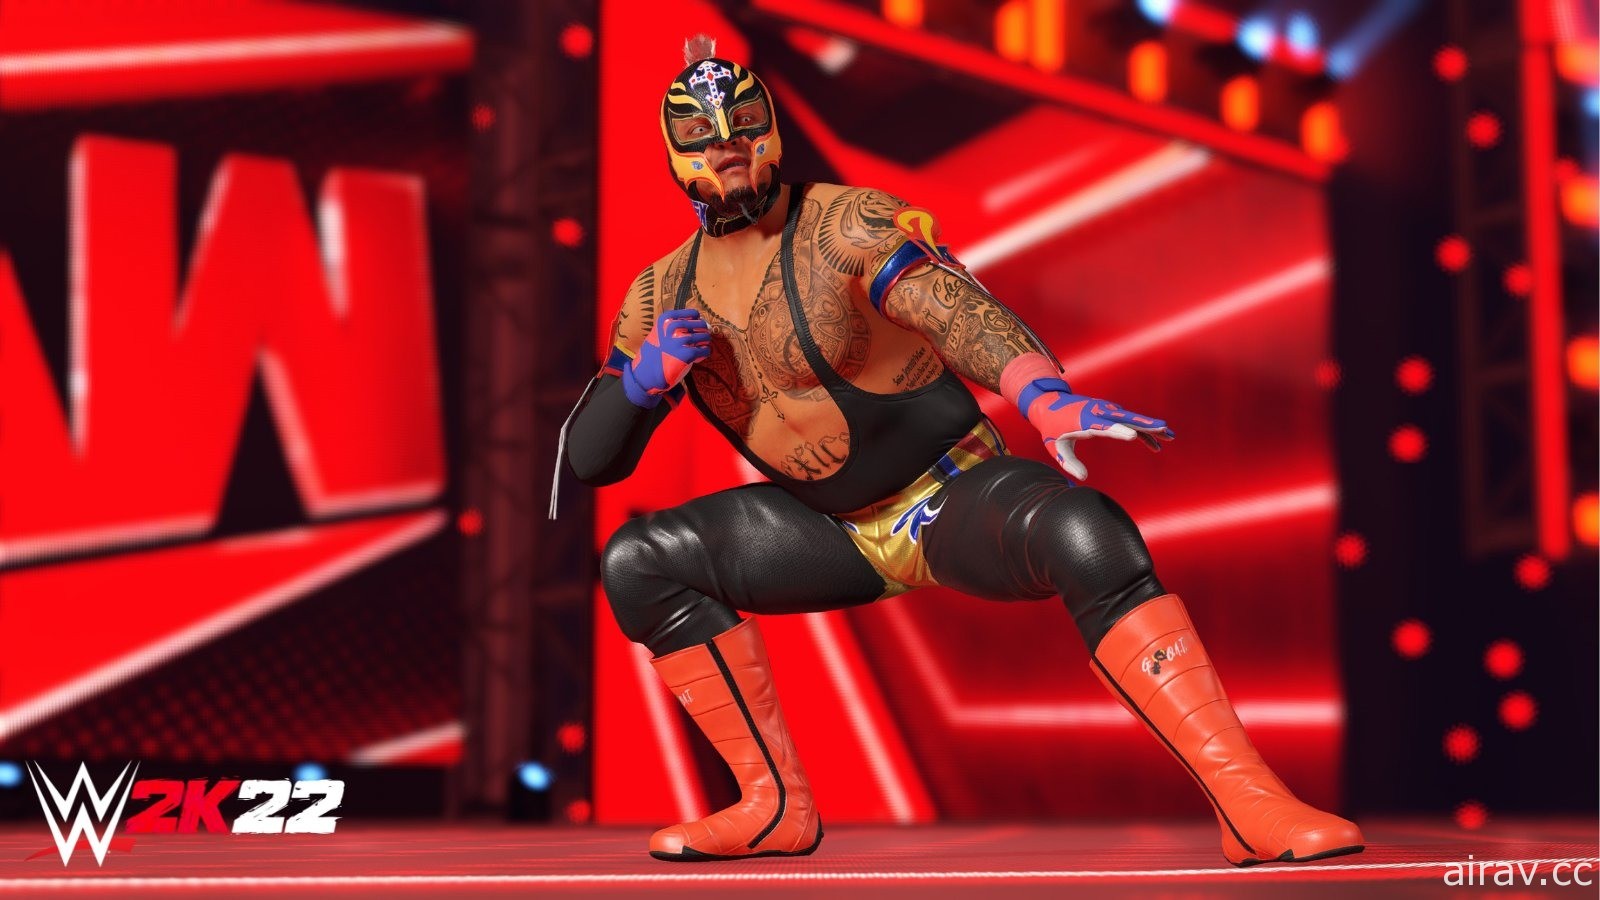 《WWE 2K22》發售平台確定 封面人物由超級巨星 Rey Mysterio 擔任